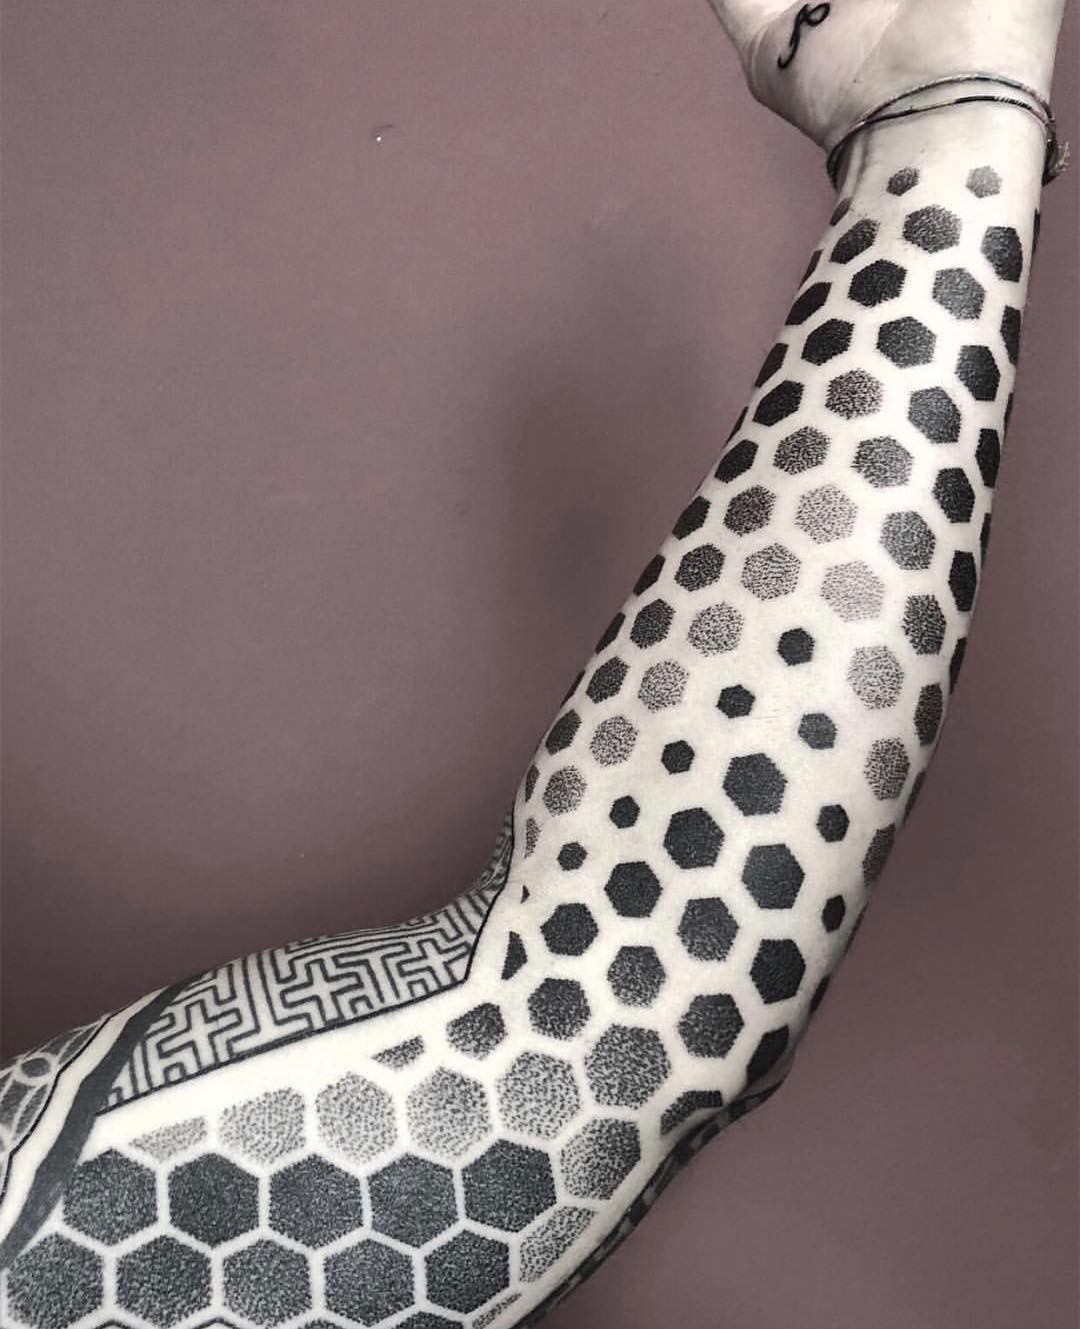 Unique Dot Work Haxagon Full Sleeve Tattoo Idea